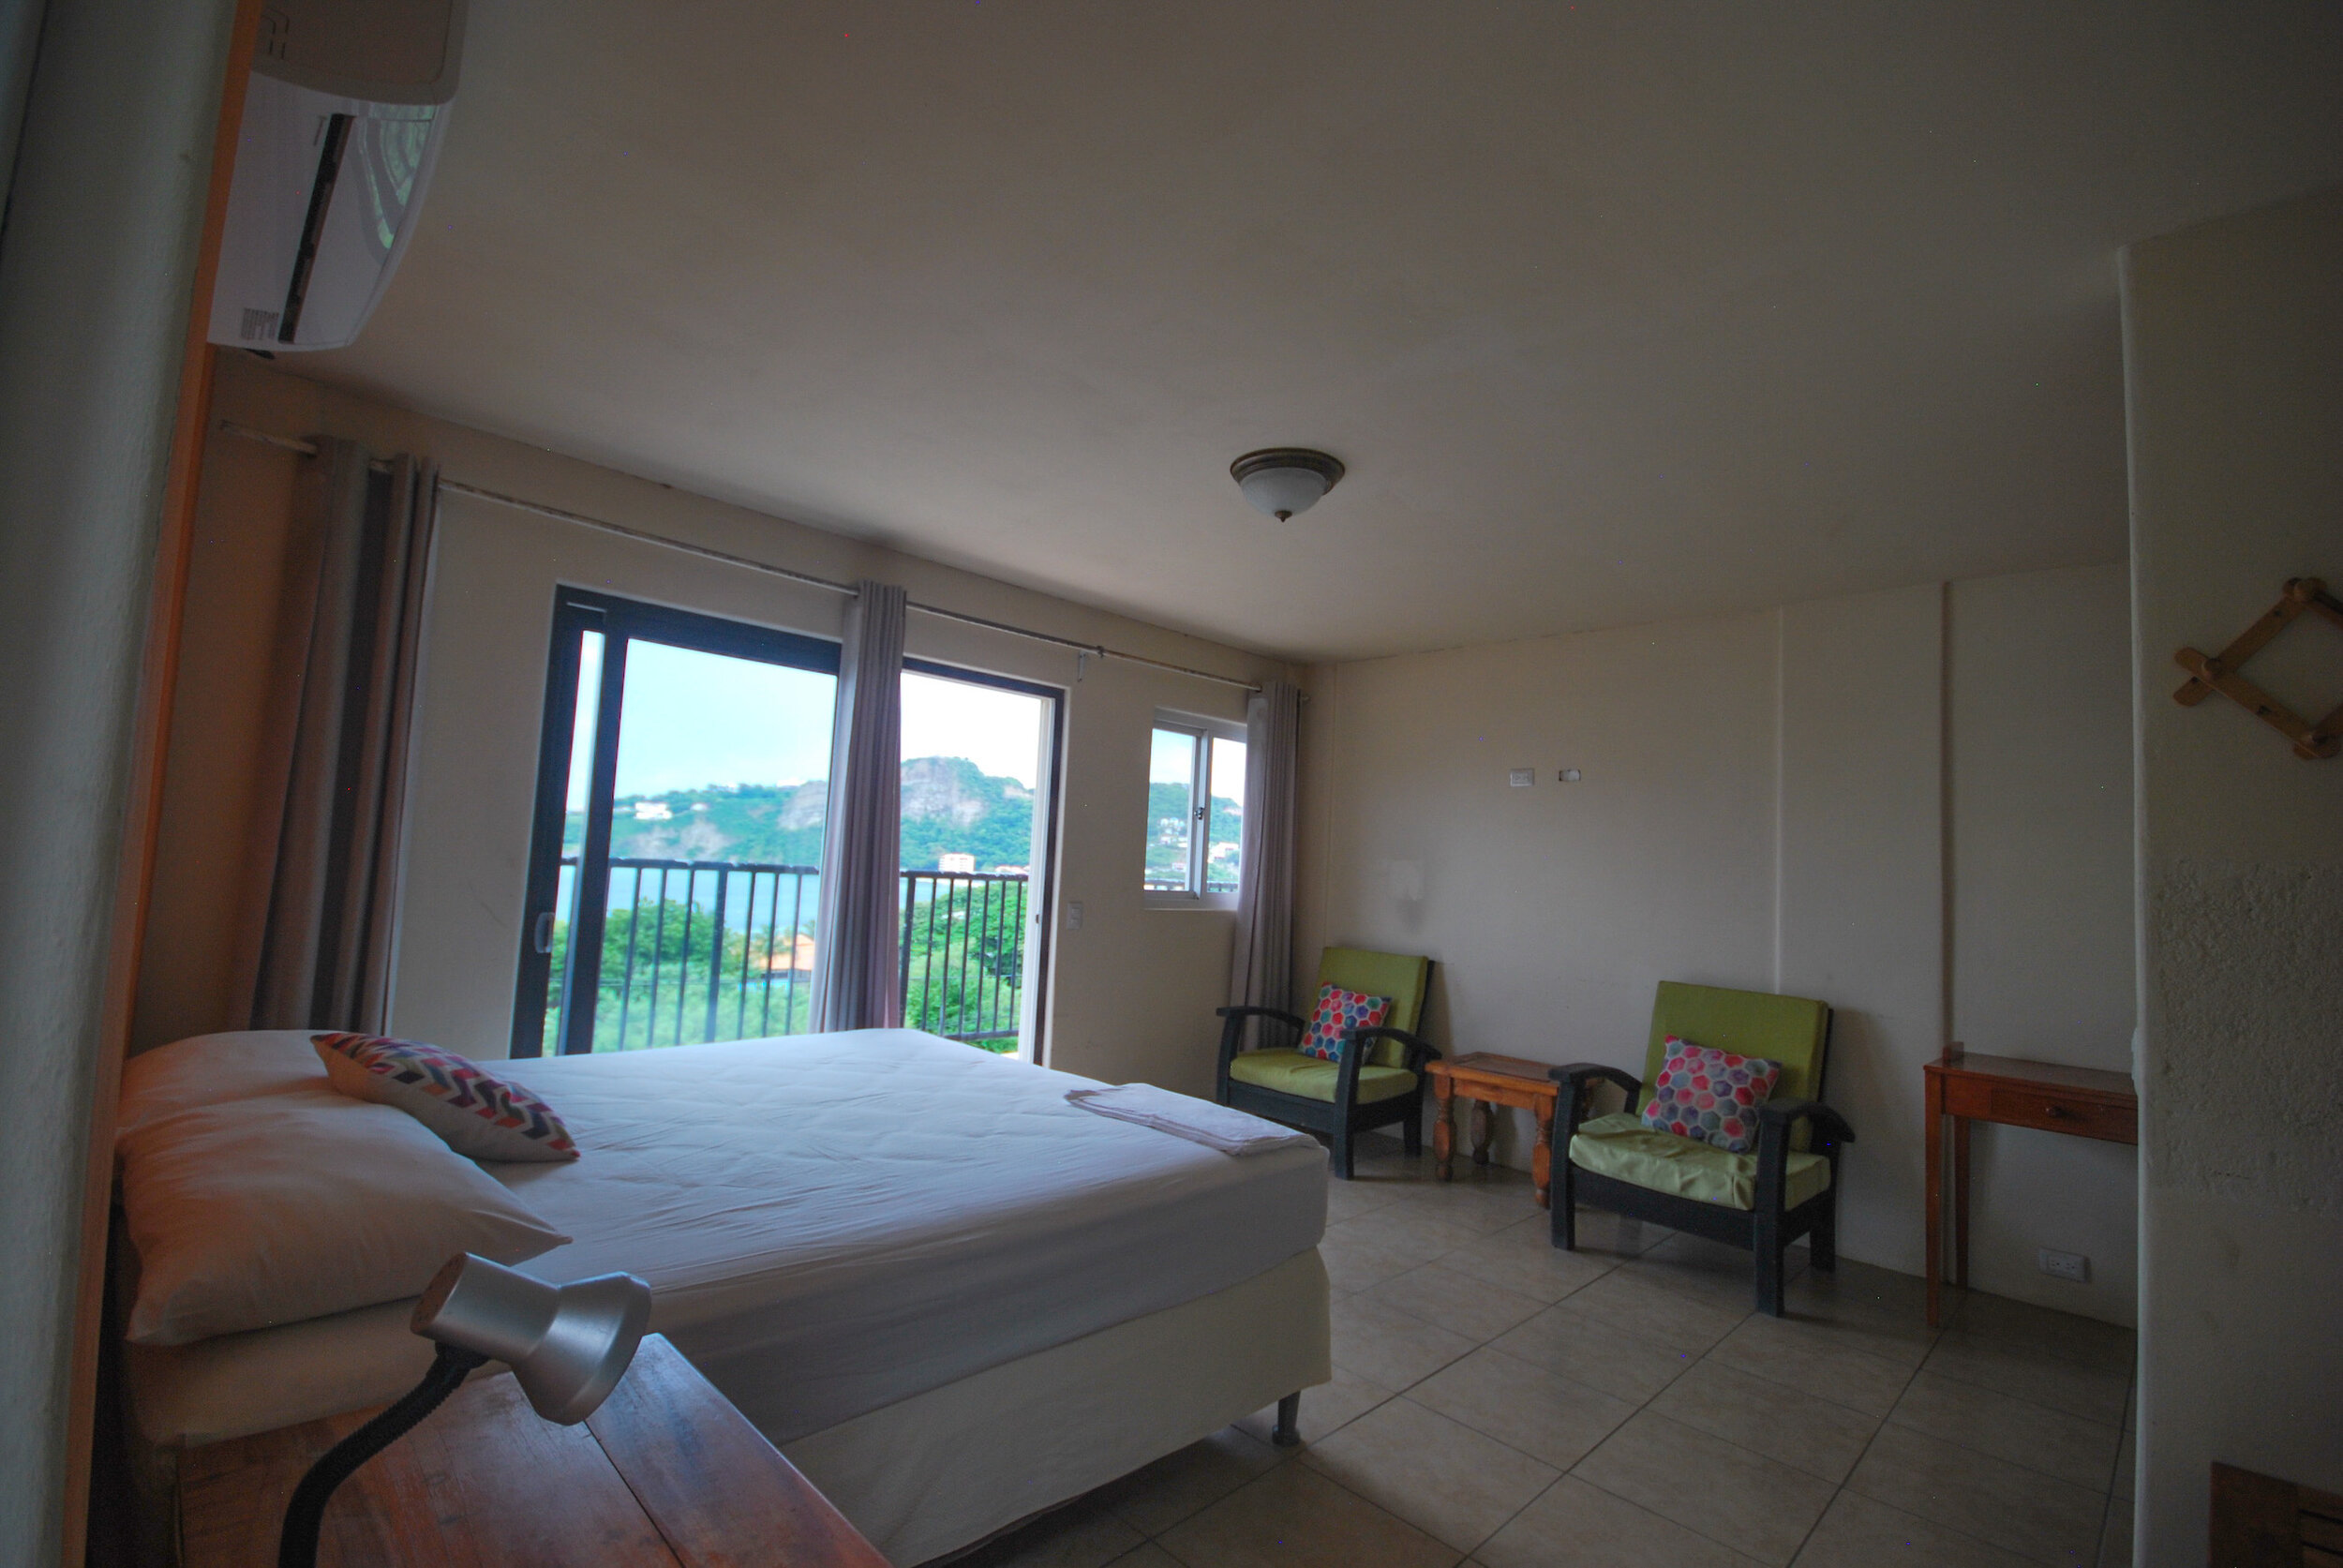 Hotel Resort For Sale San Juan Del Sur Nicaragua 13.JPEG